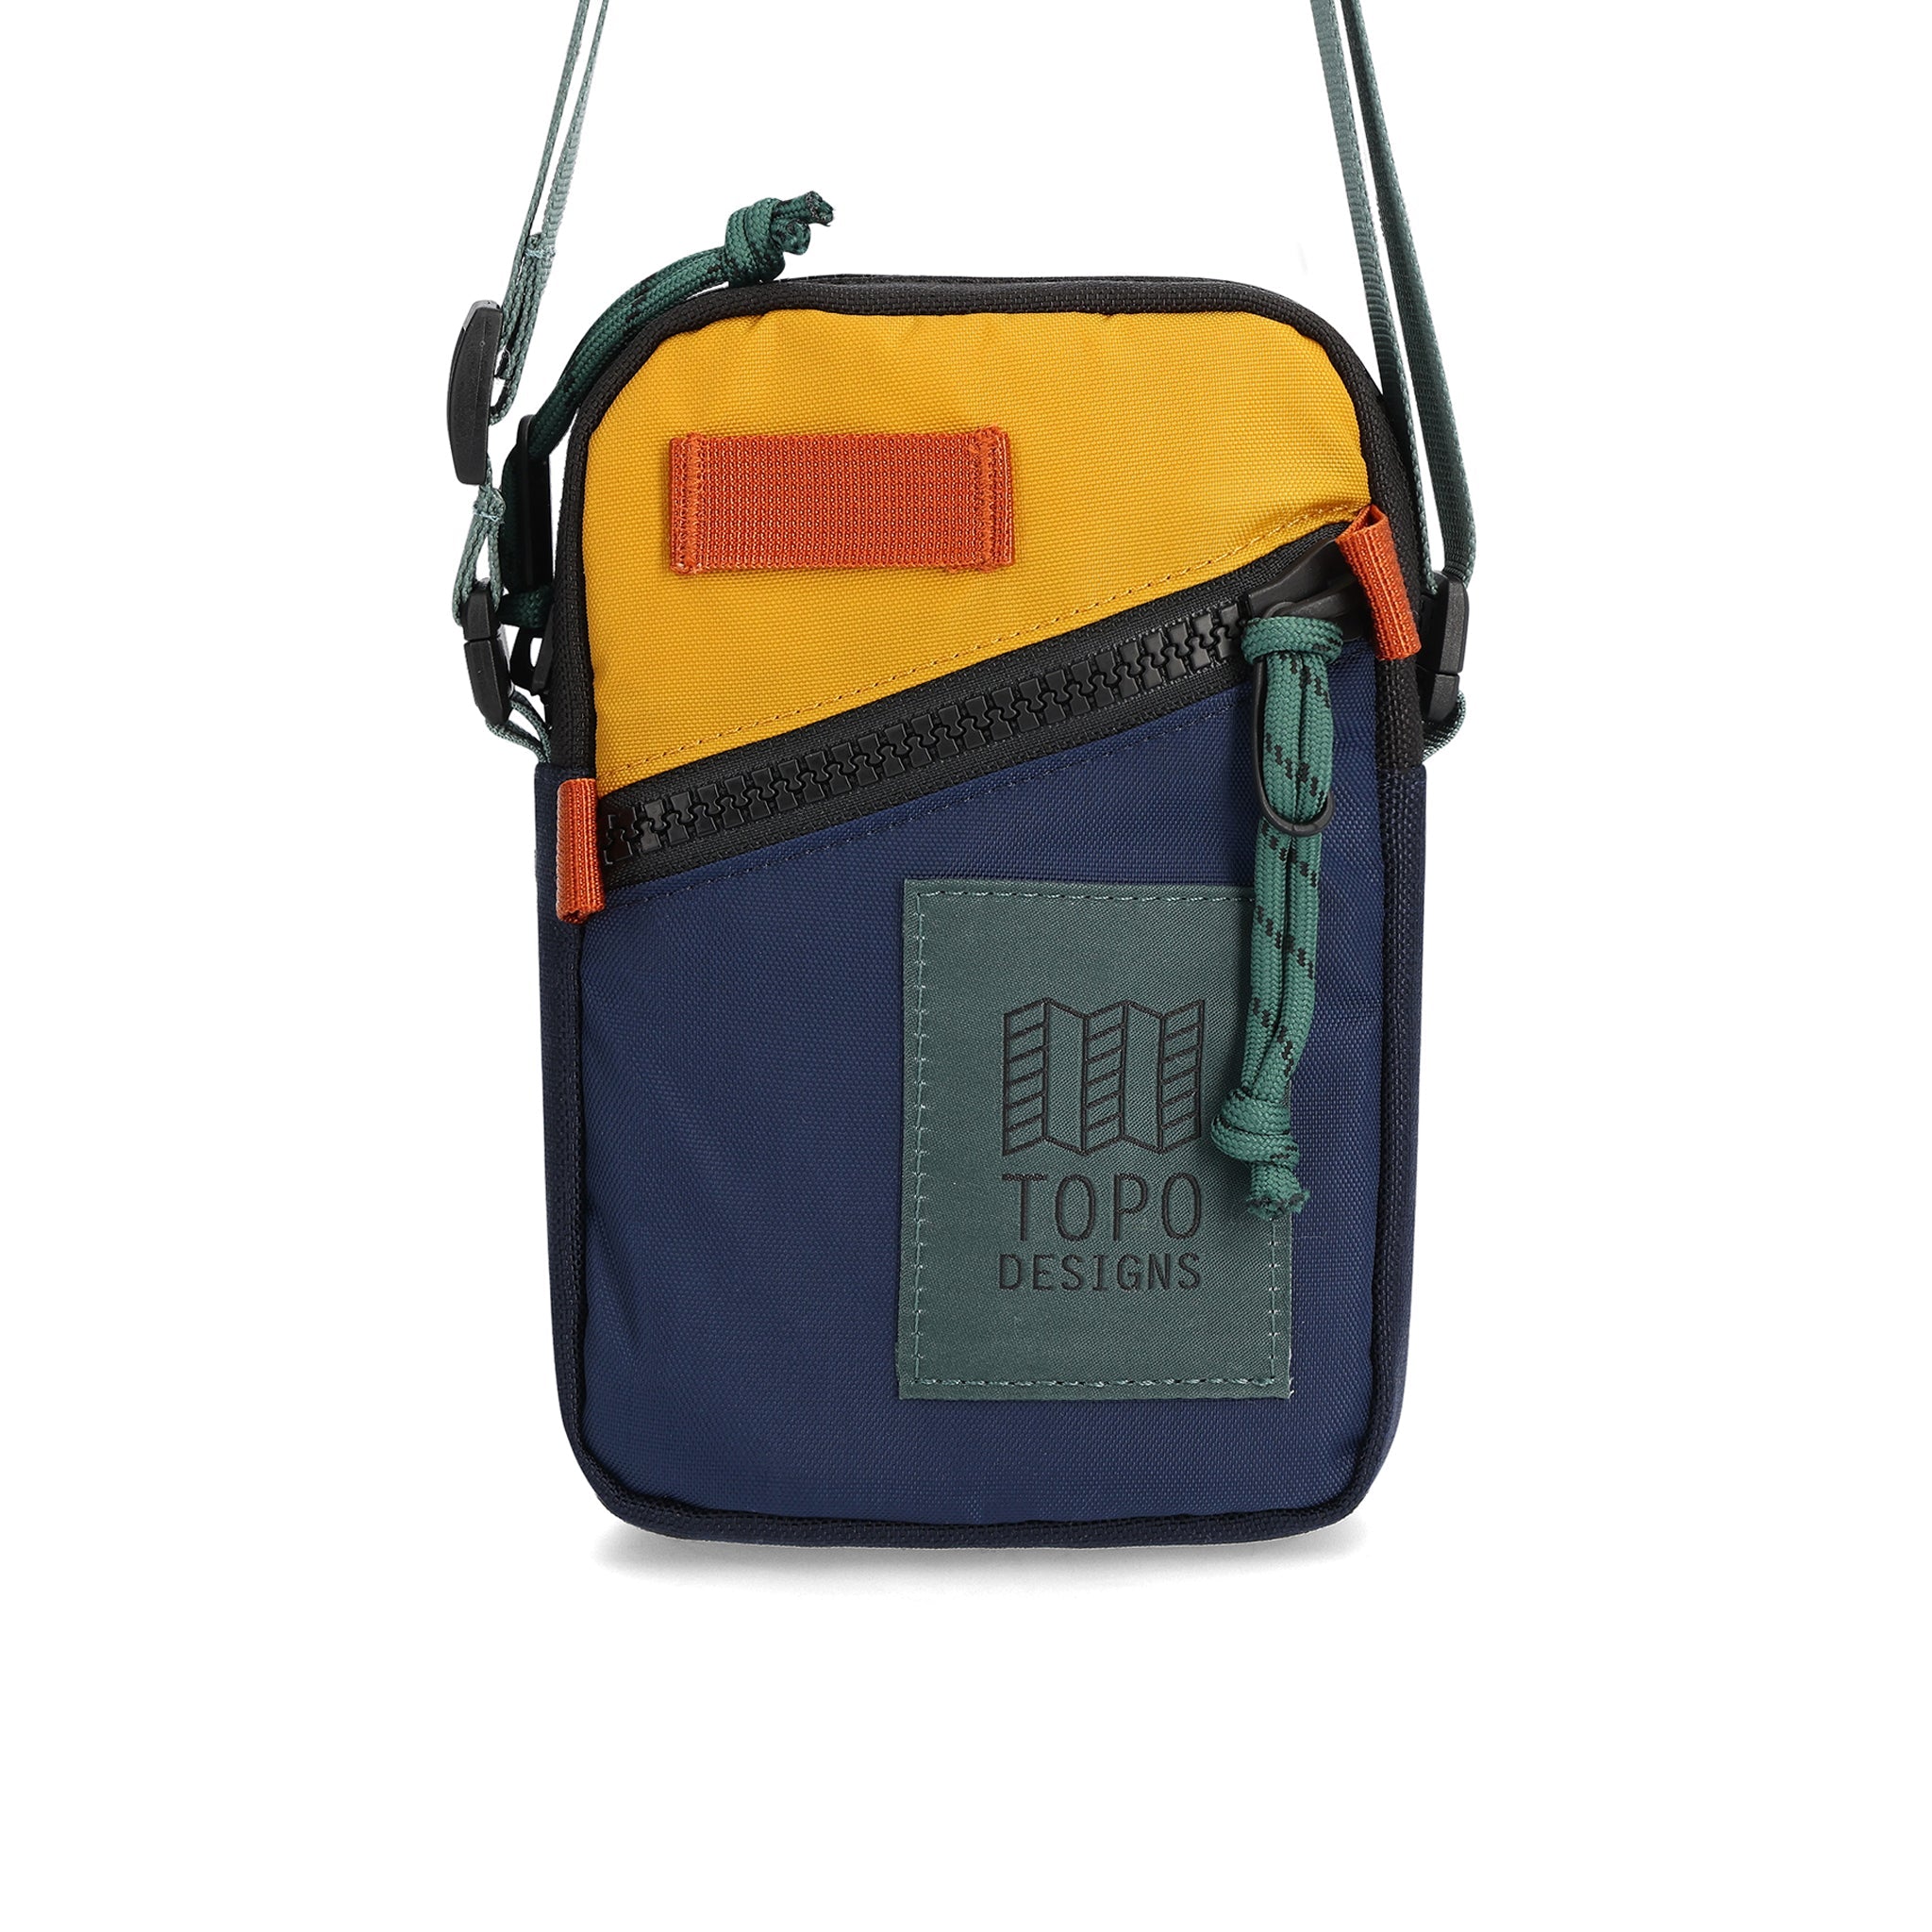 Front View of Topo Designs Mini Shoulder Bag in "Navy / Mustard"